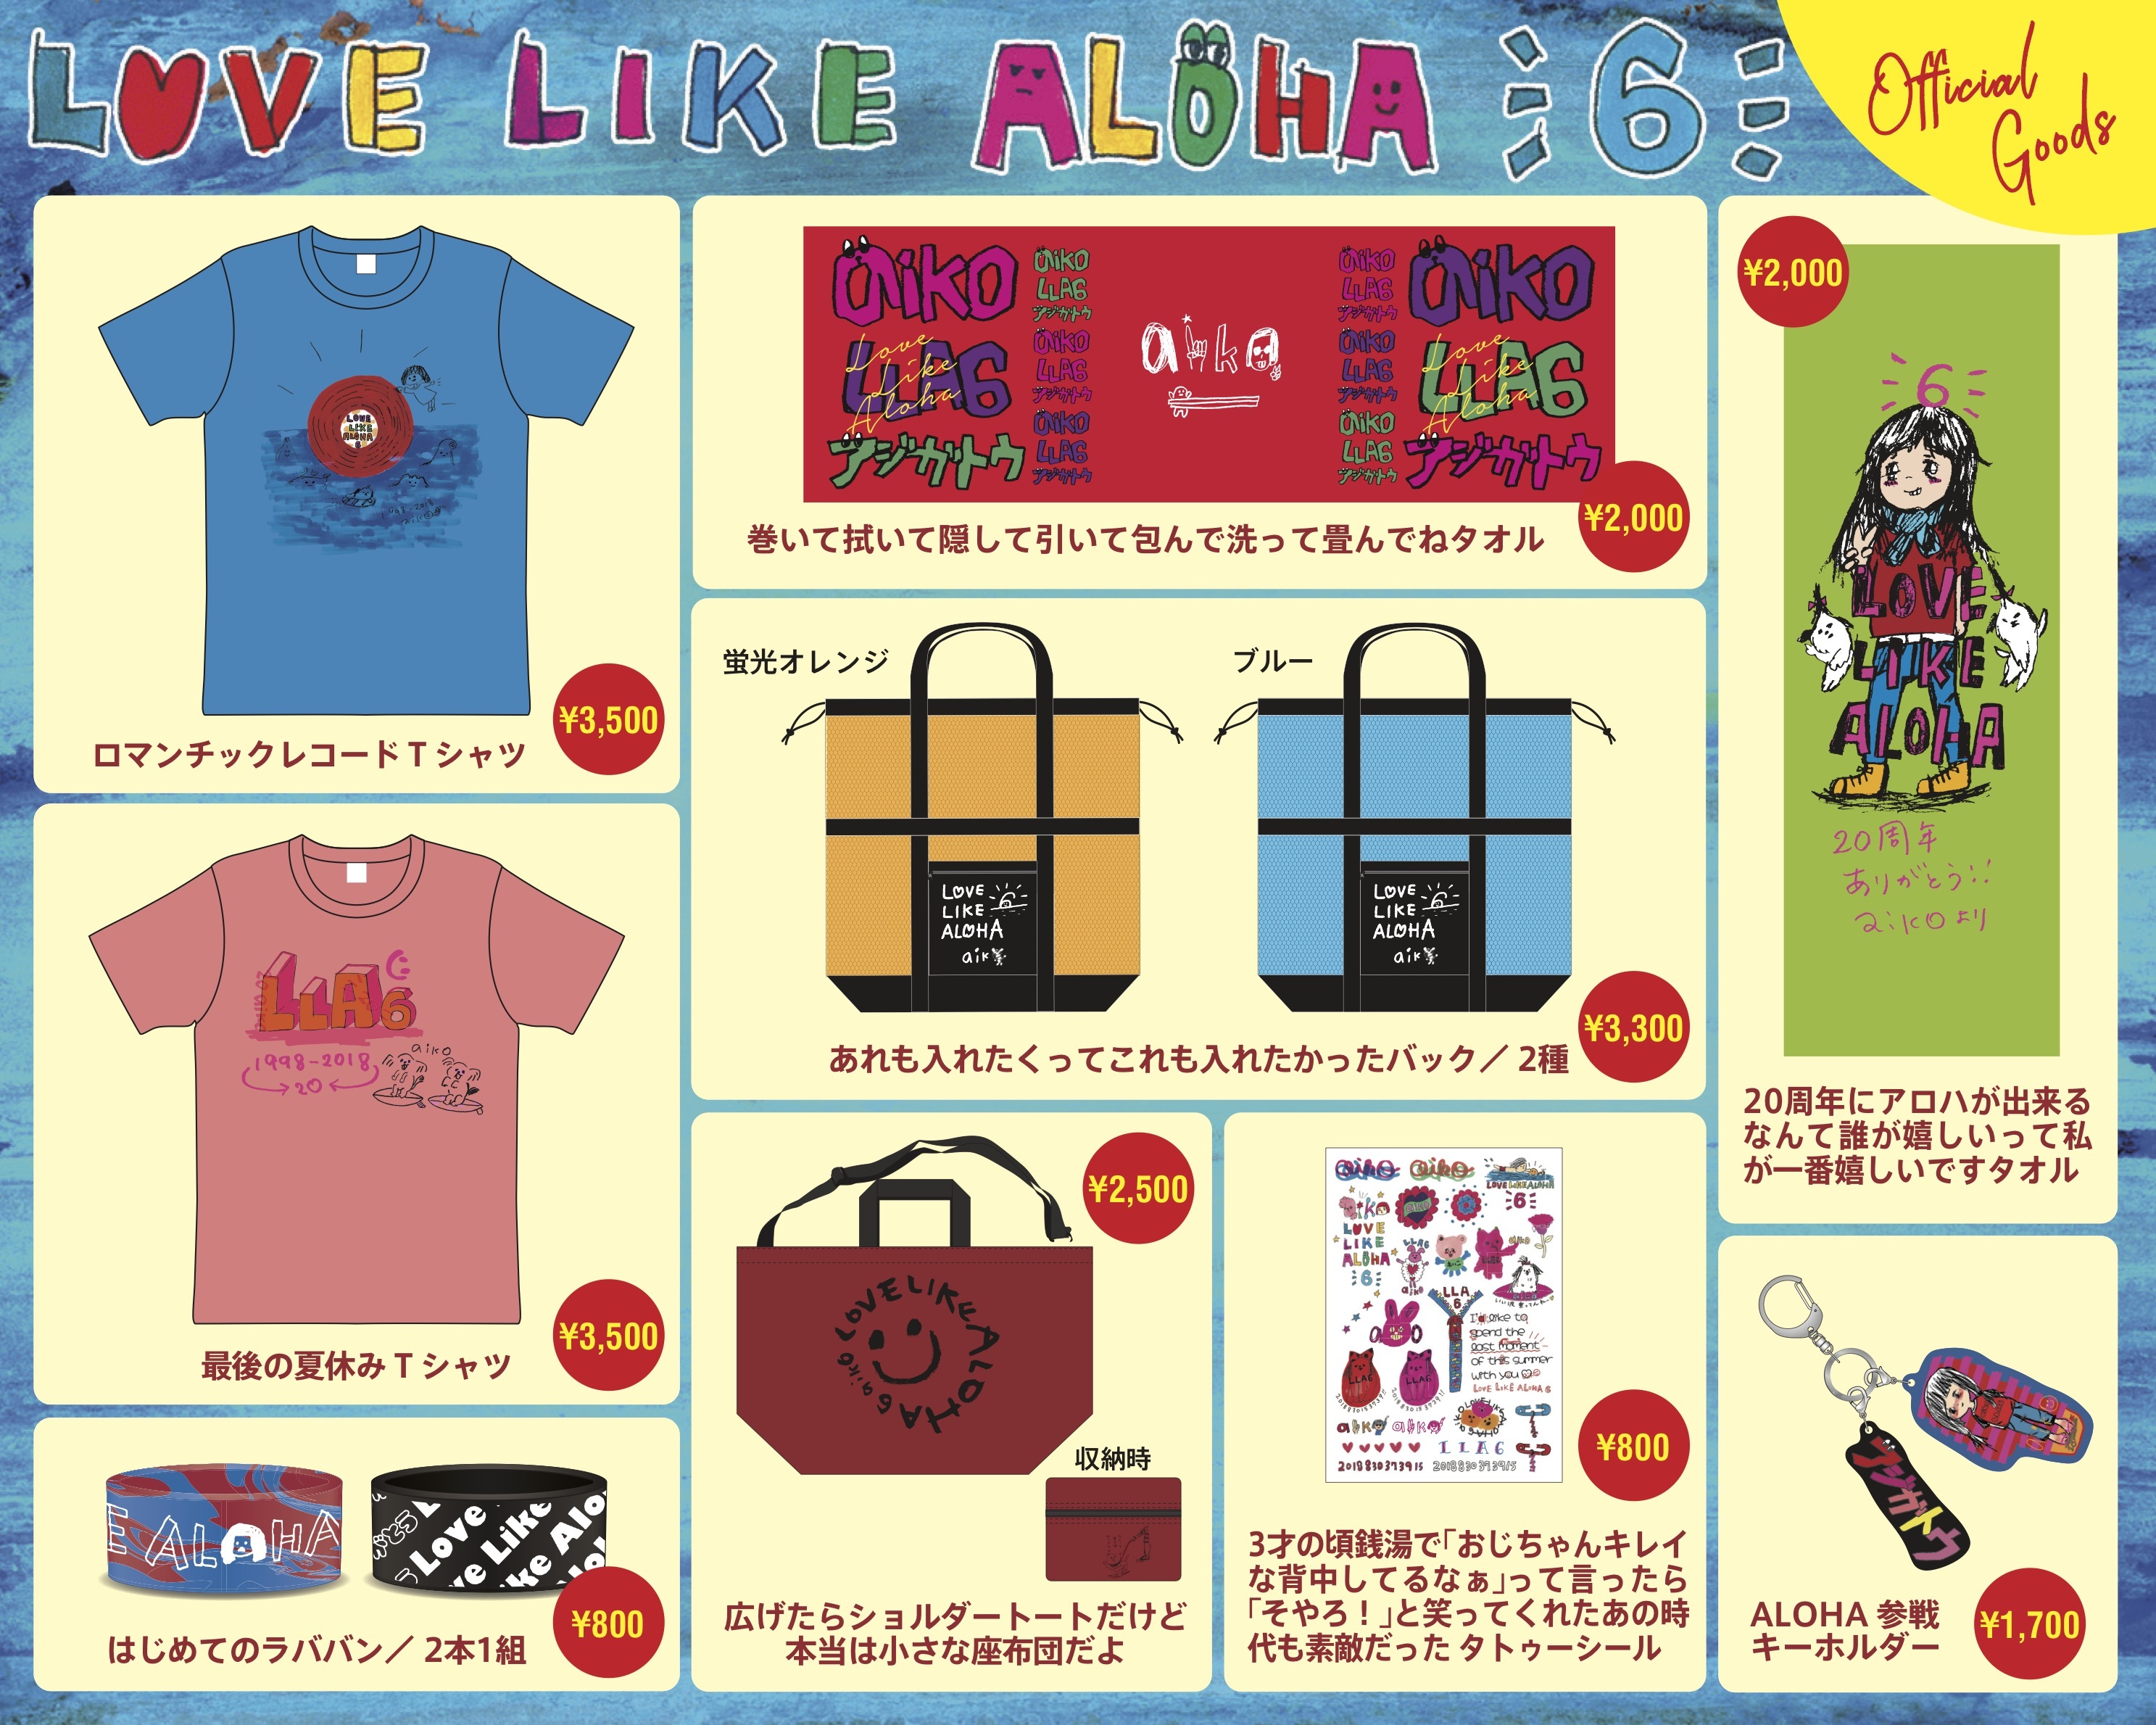 Aiko 本人デザインによる Love Like Aloha Vol 6 グッズ通販がスタート Spice エンタメ特化型情報メディア スパイス